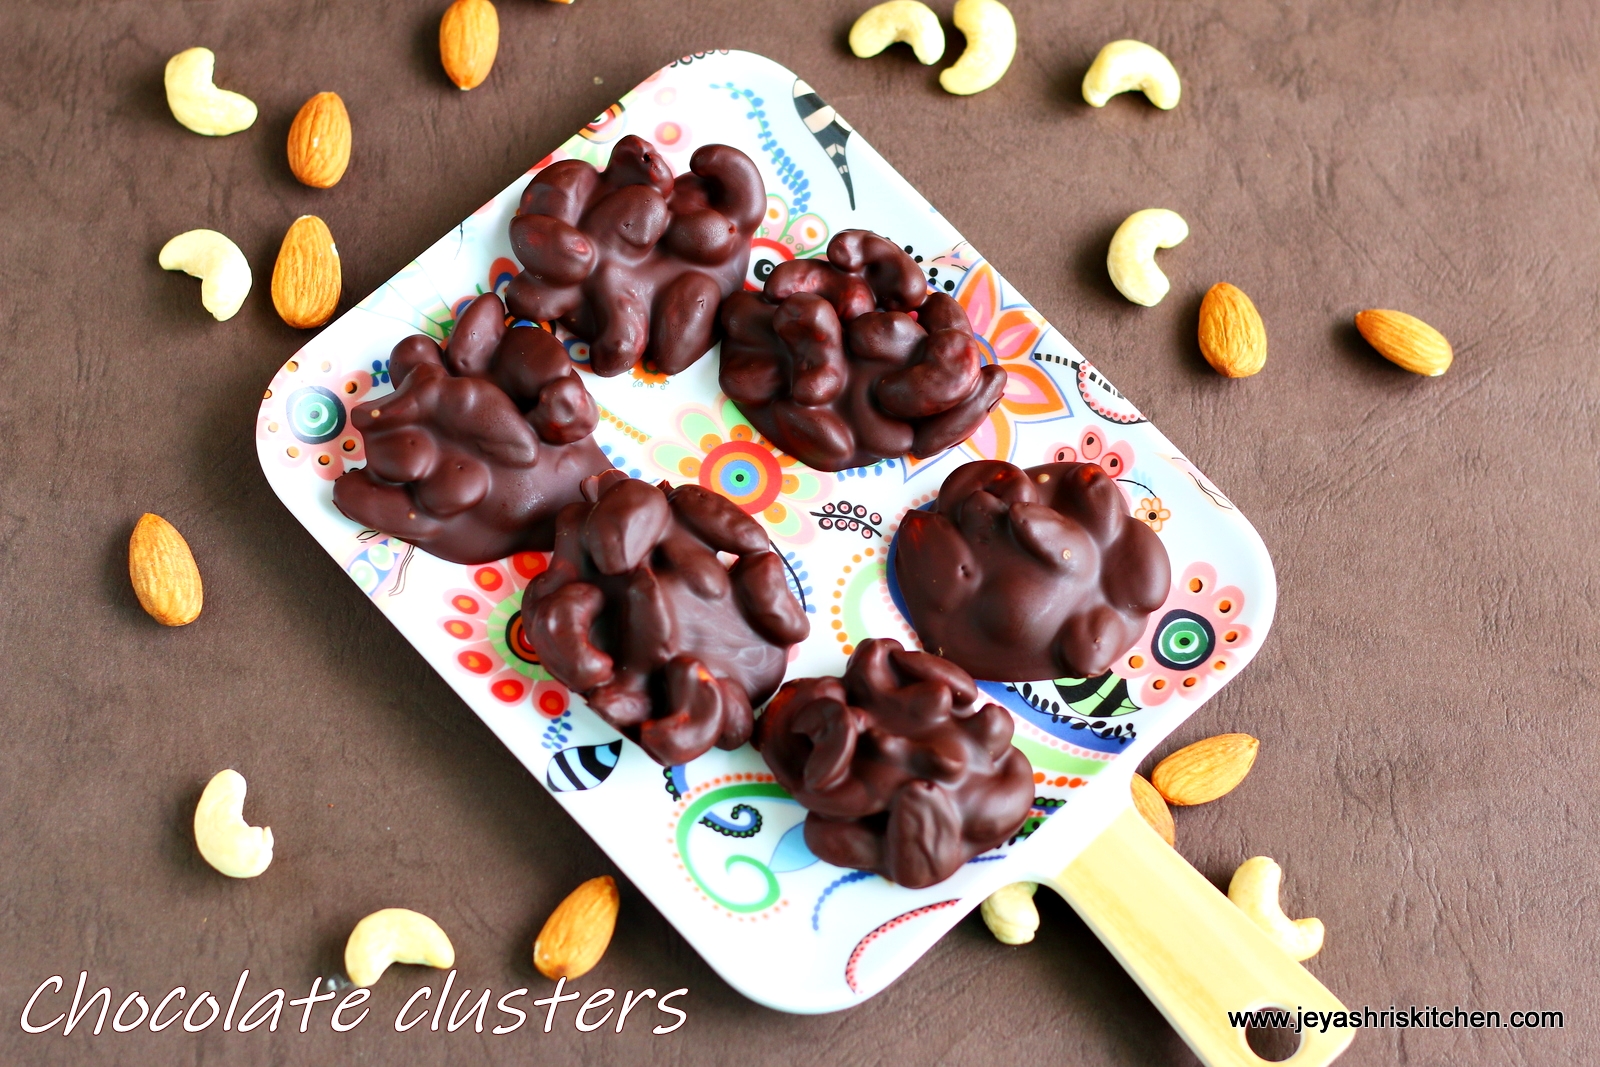 Easy Chocolate clusters recipe - Jeyashri's Kitchen